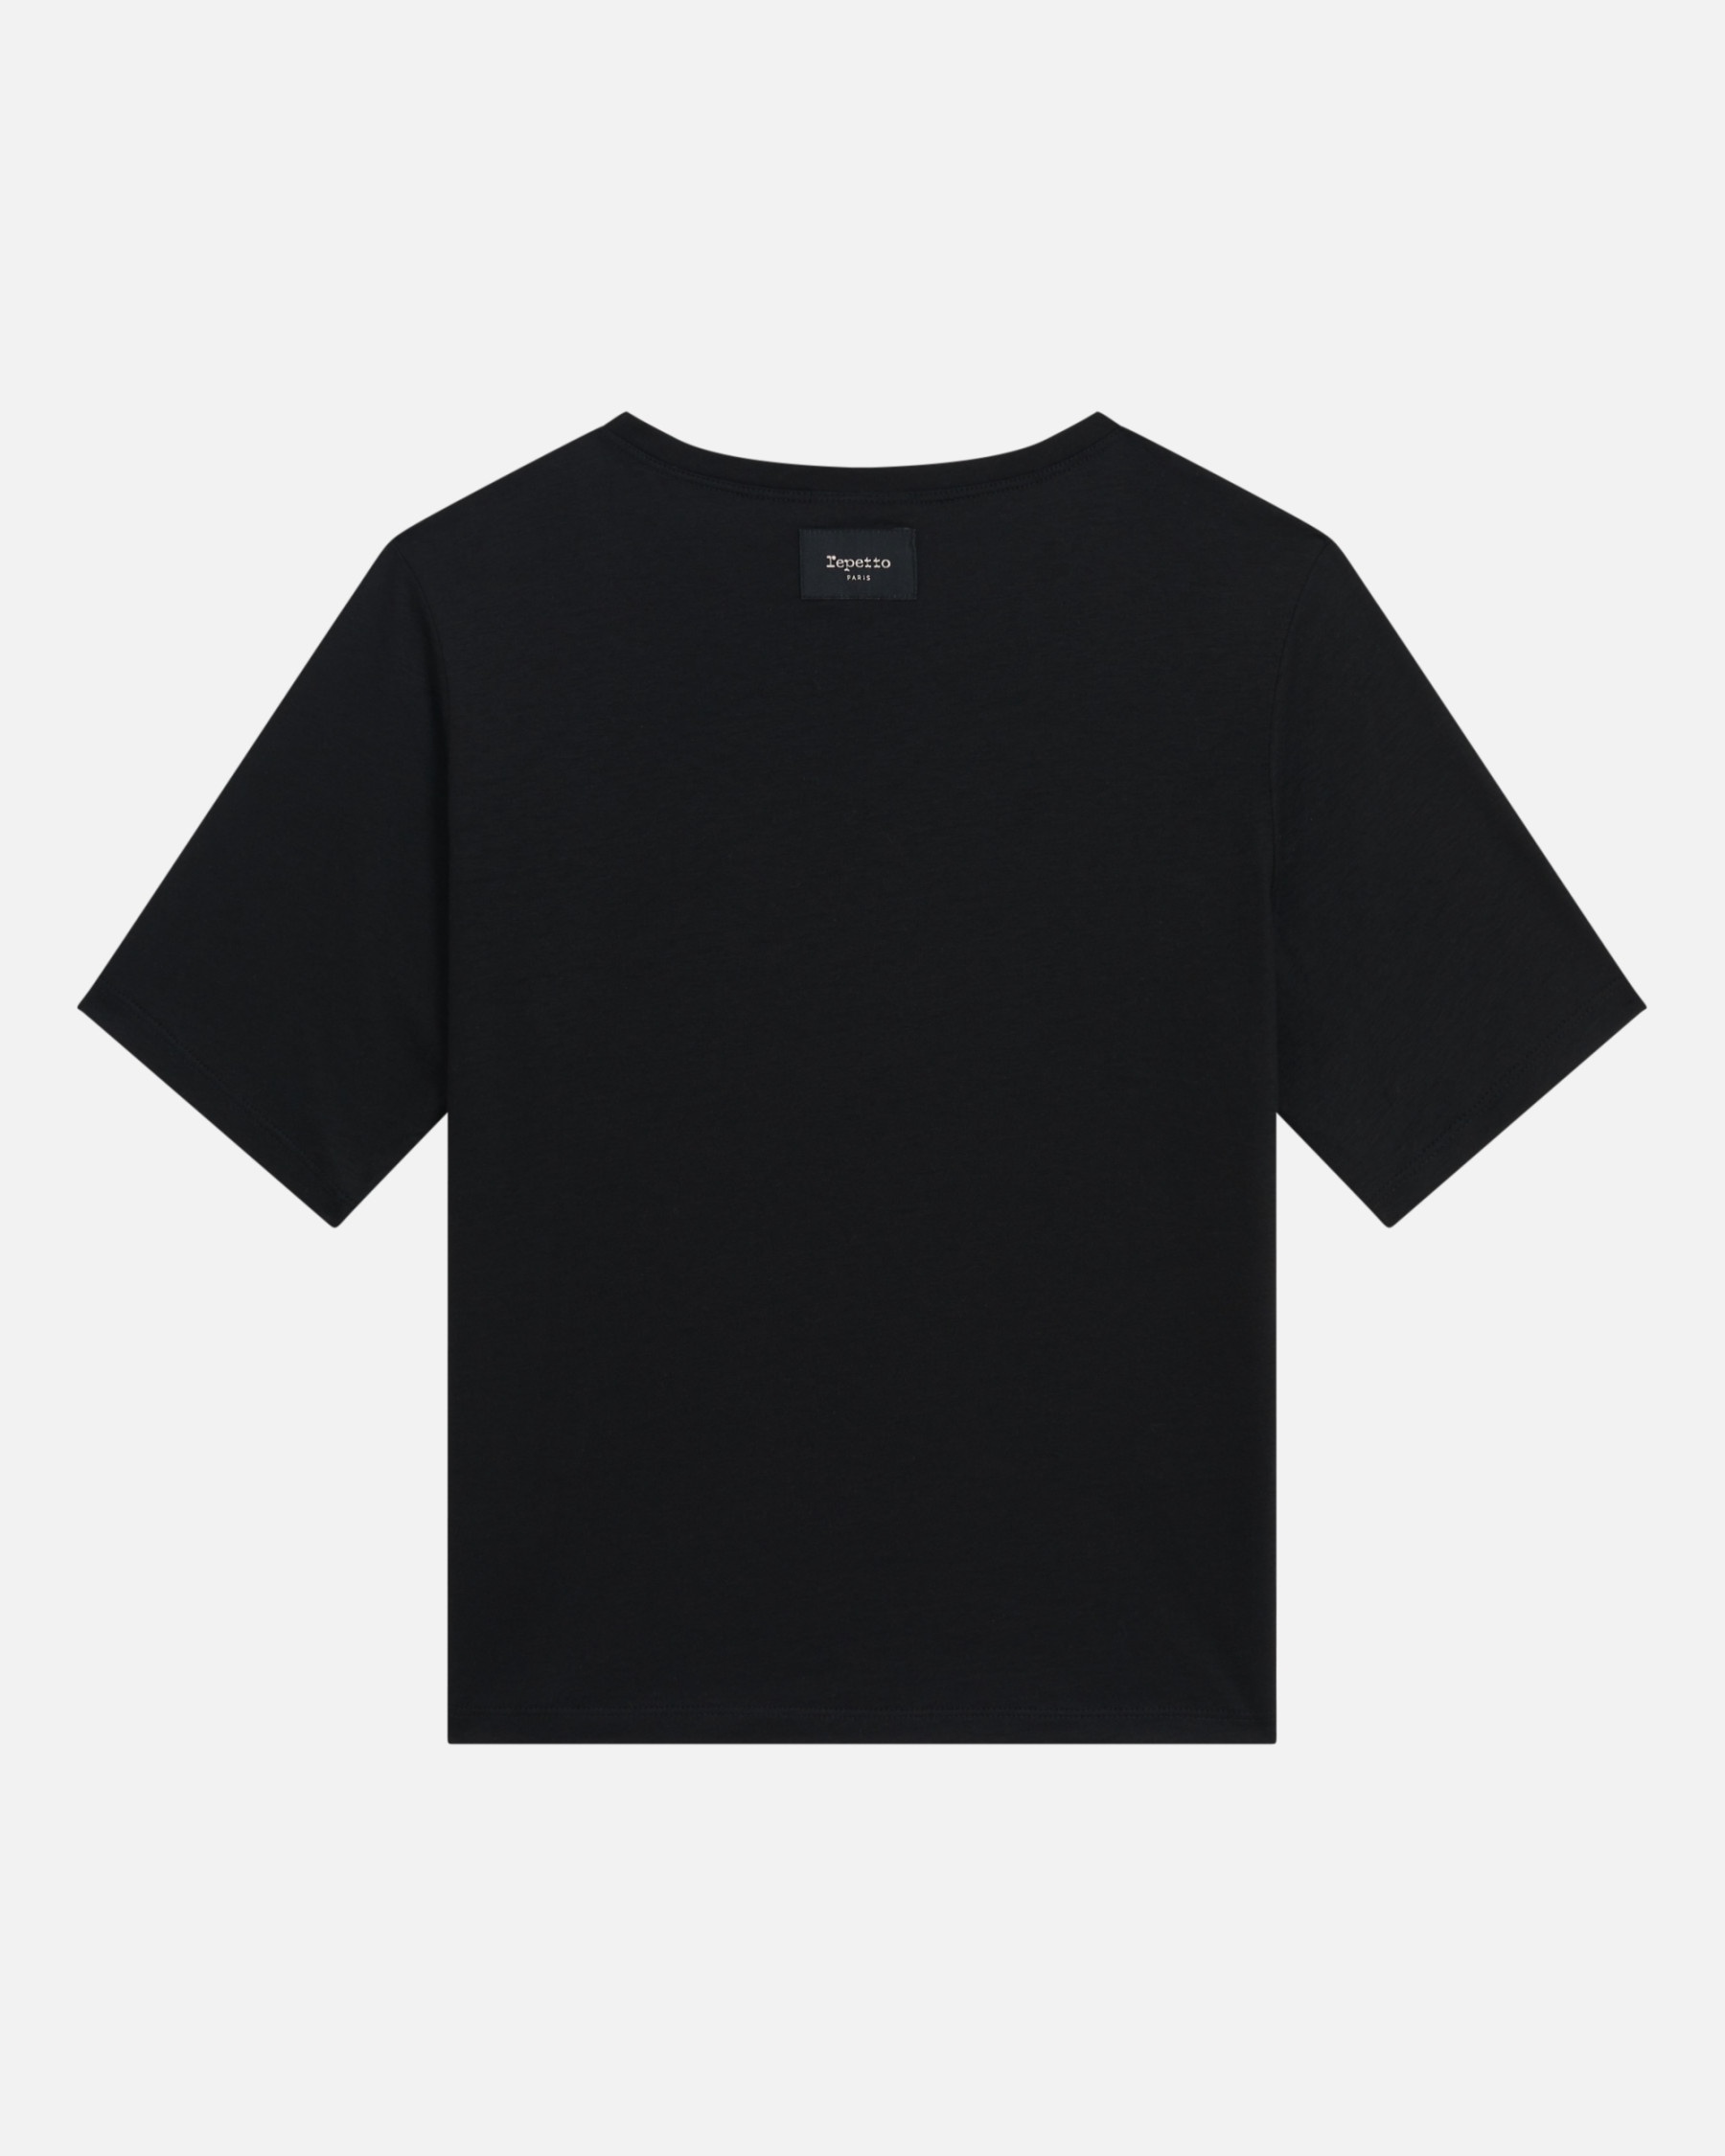 Repetto boutique t-shirt - 2